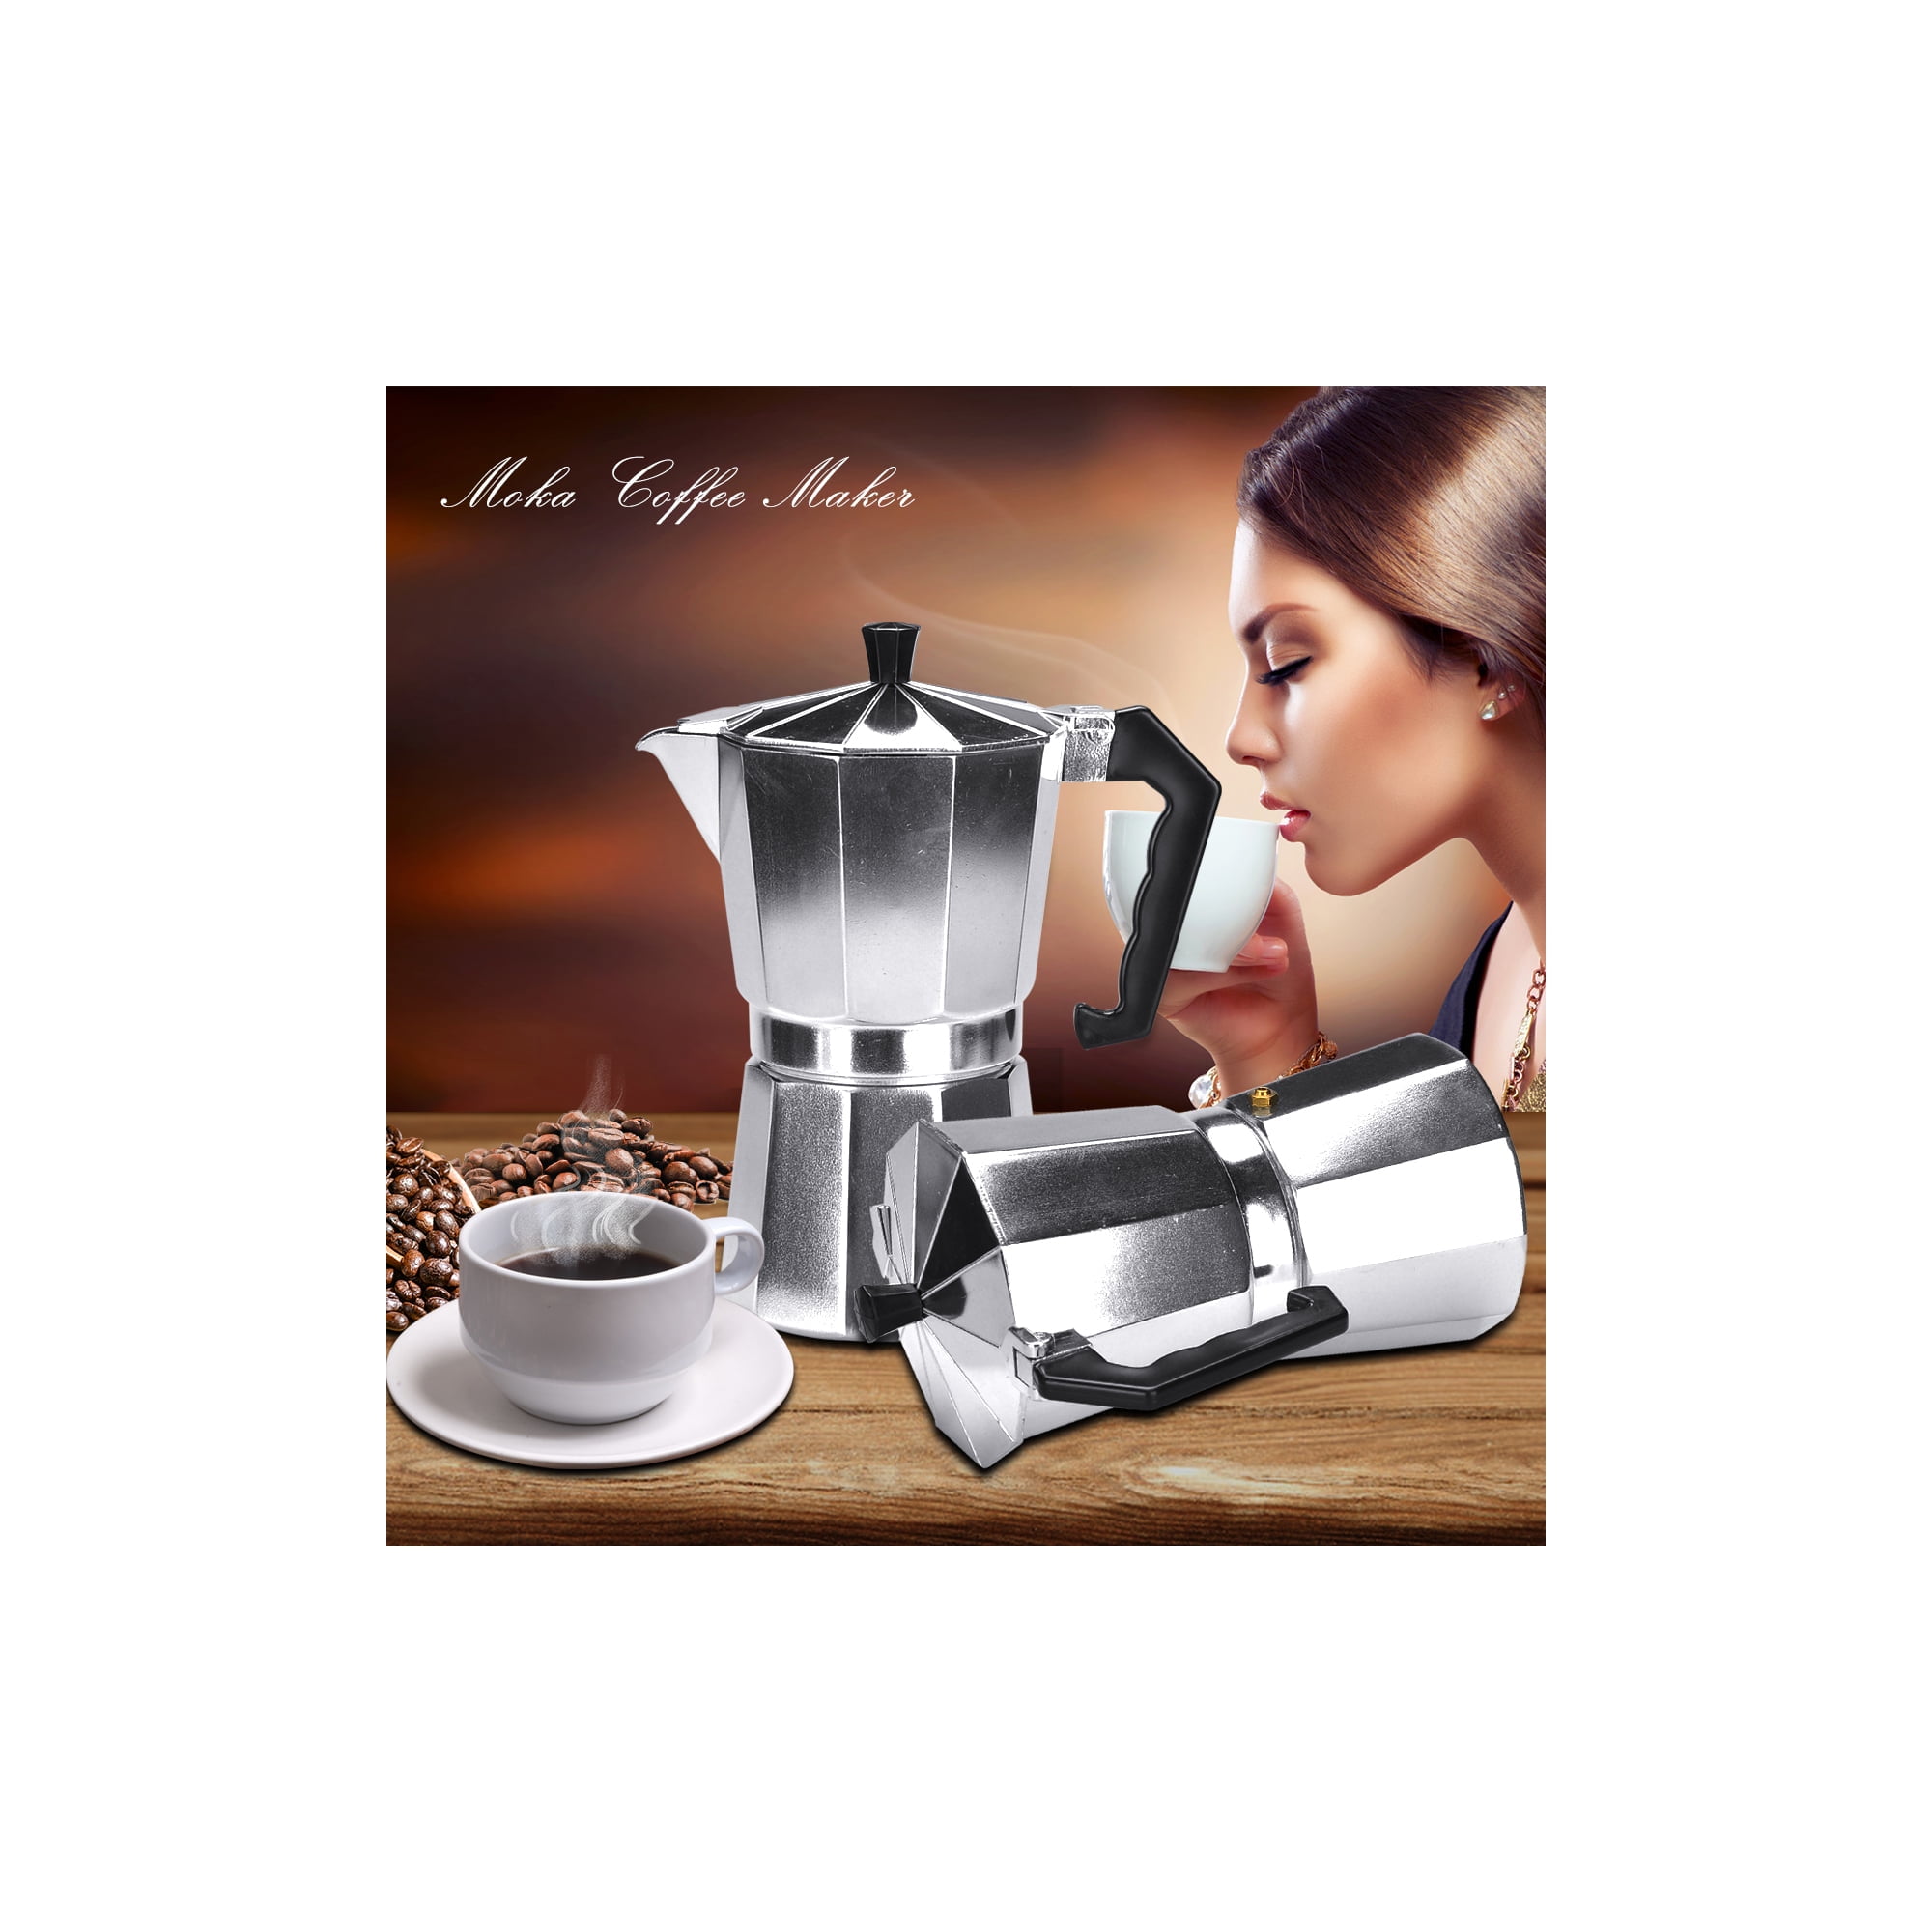 San ignacio Bolonia 3 Cups Italian Coffee Maker Silver